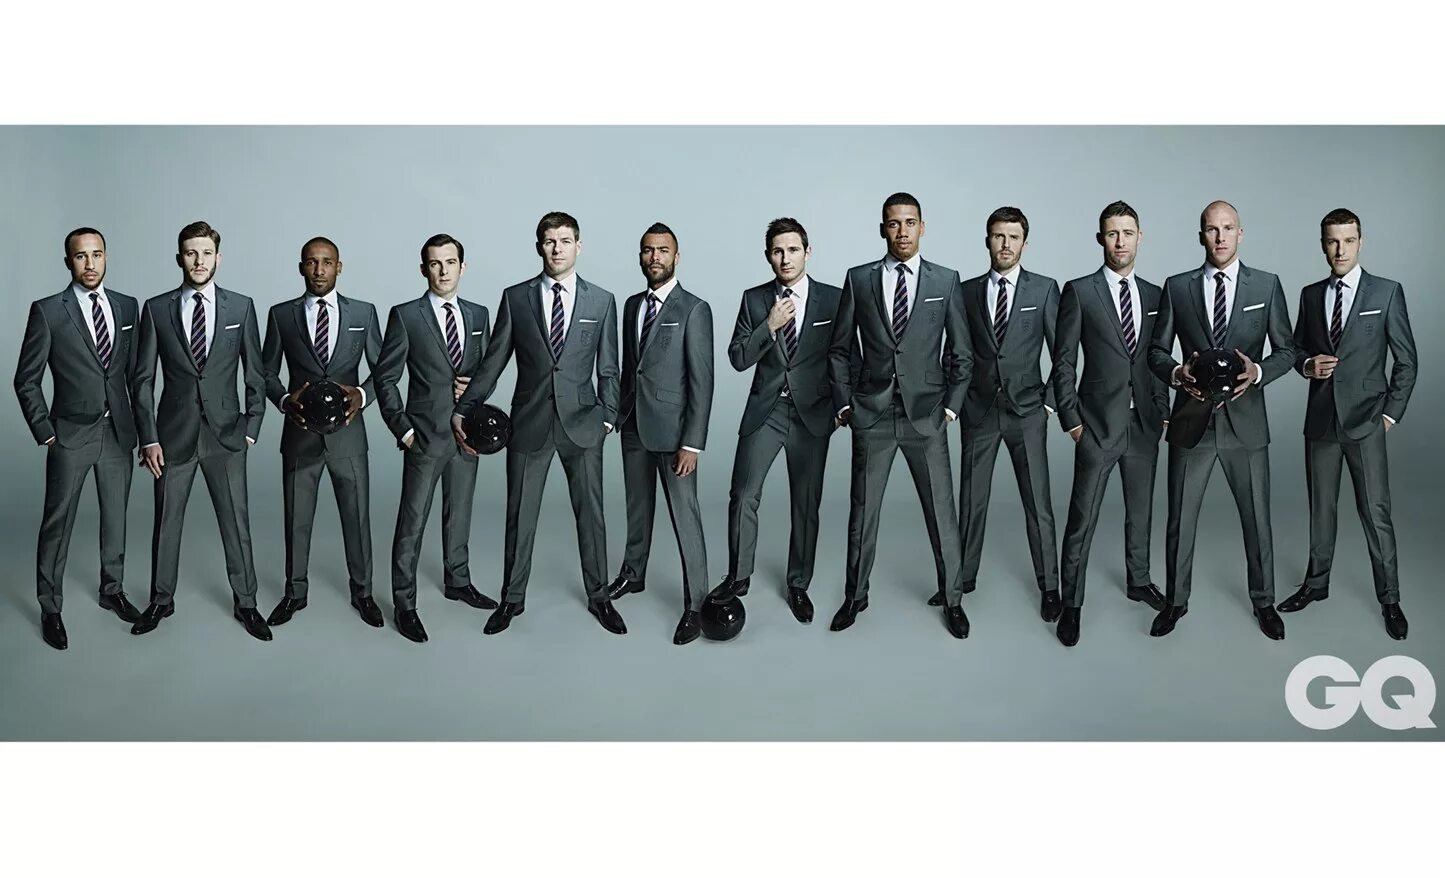 18 5 мужчин. Мужская группа. Группа мужчин в костюмах. Элитная группа. Группа парней.